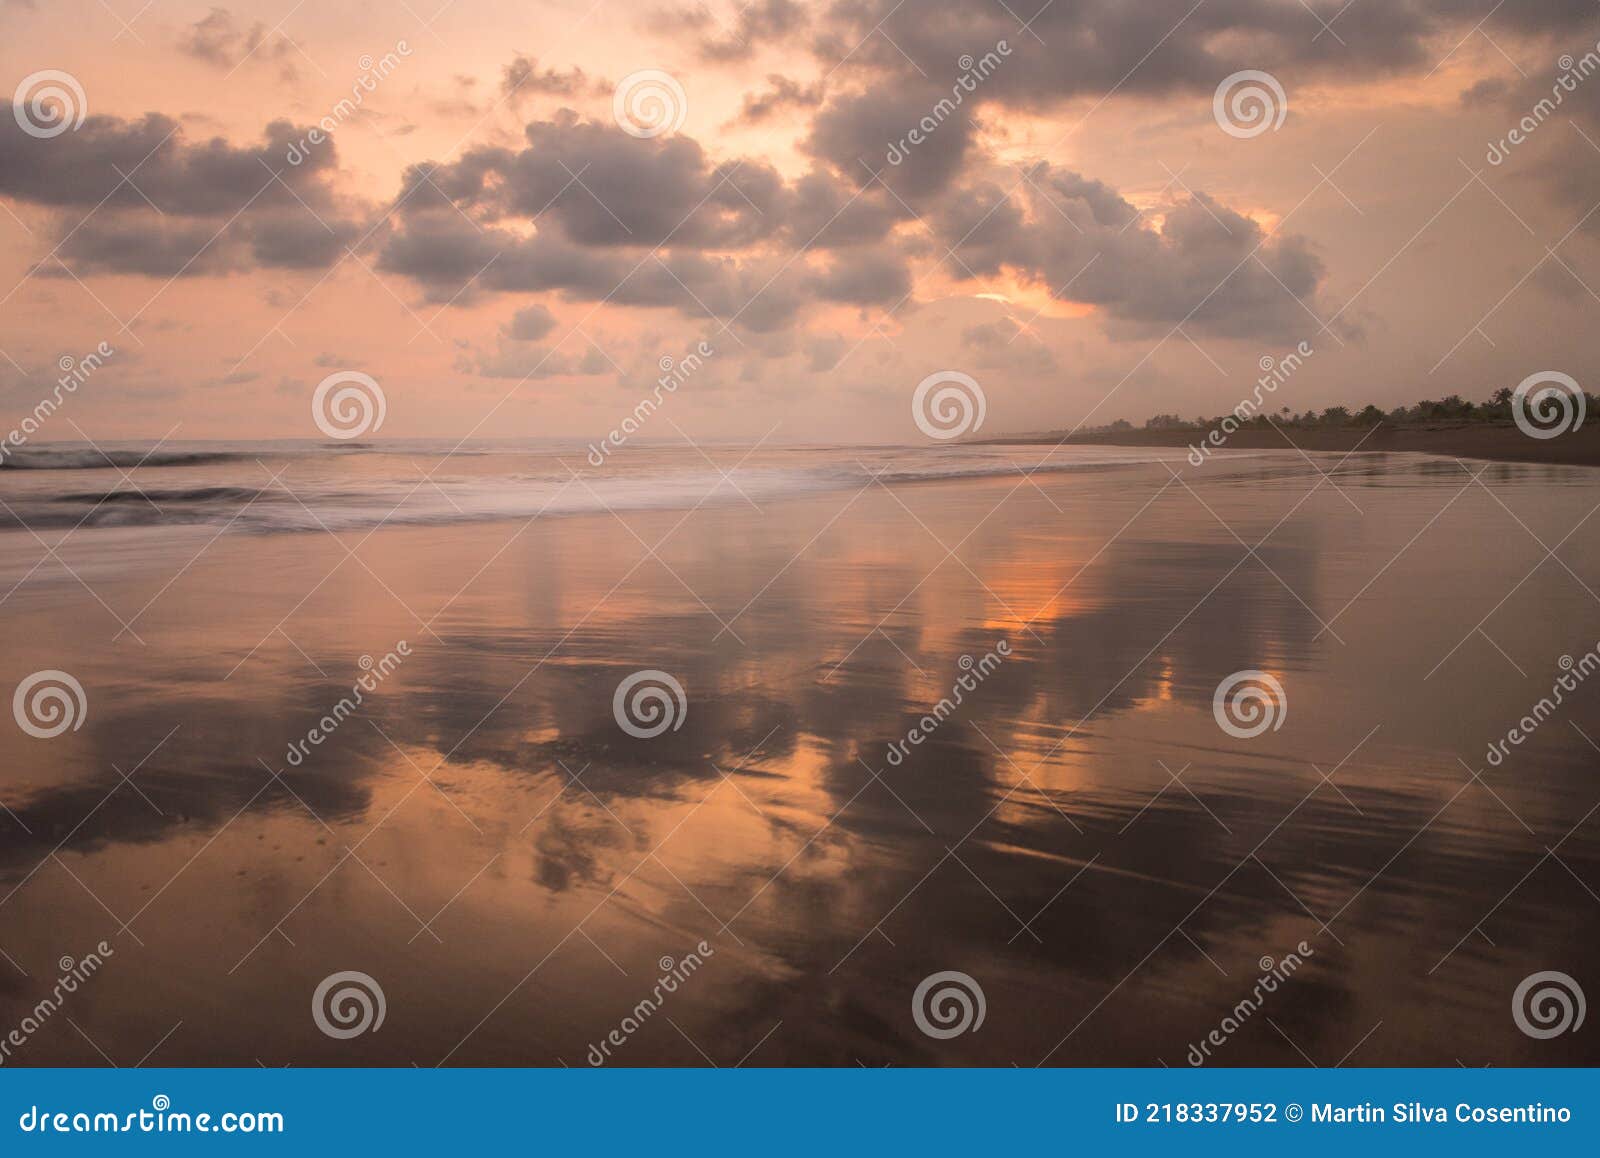 sunset on the beaches of pandagaran in java, indonesia